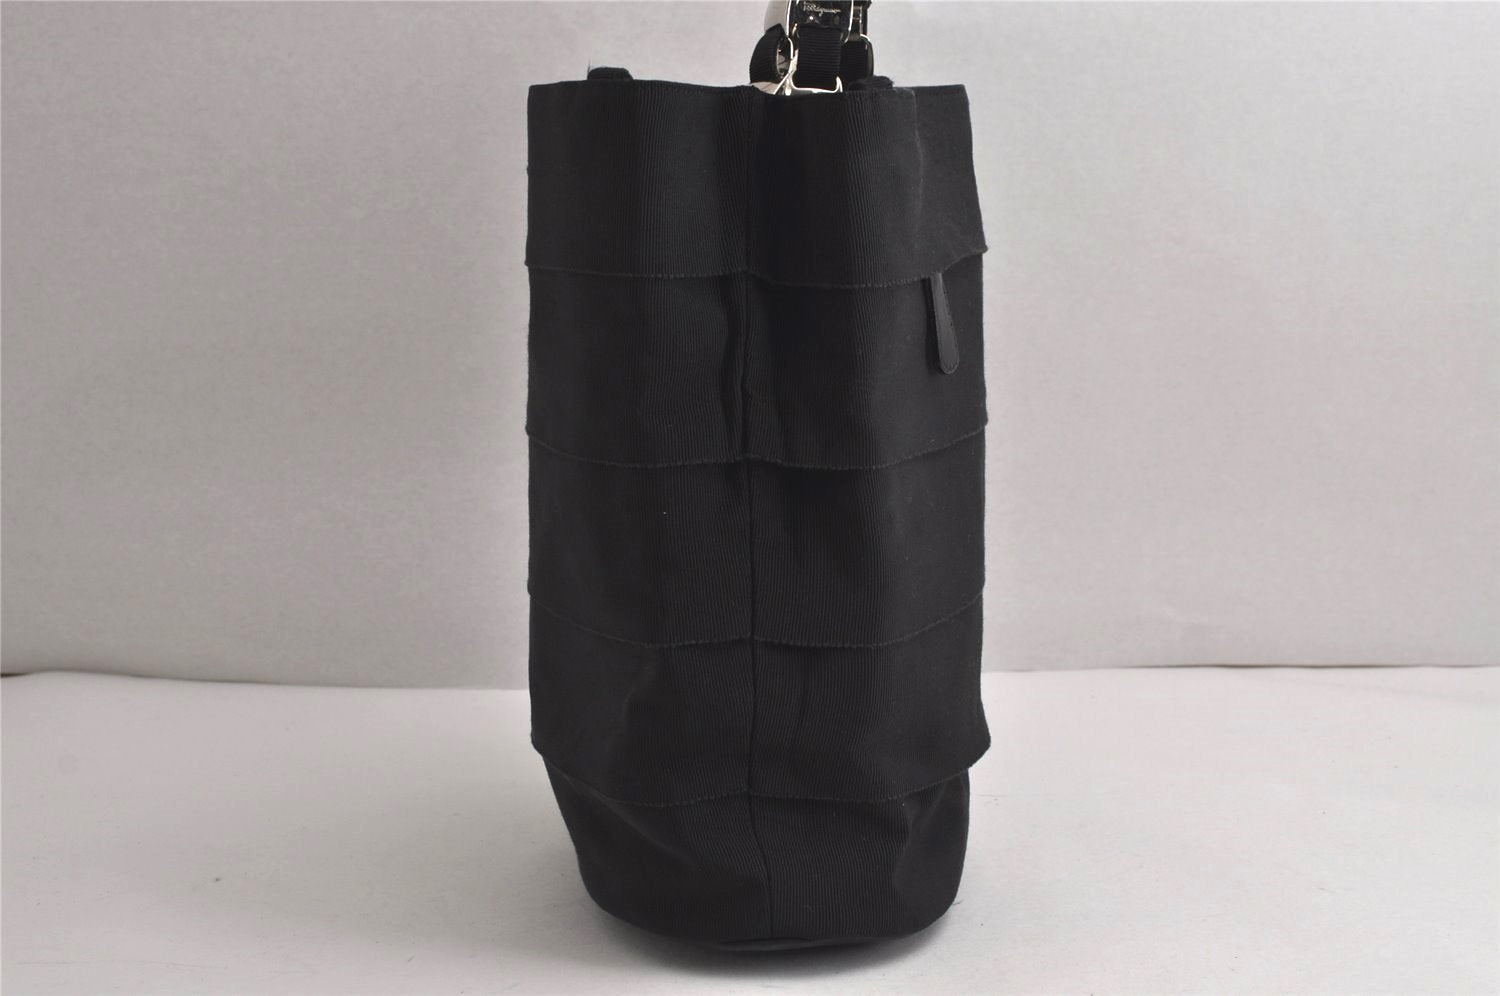 Authentic Salvatore Ferragamo Vara Canvas Leather Shoulder Tote Bag Black 7752J